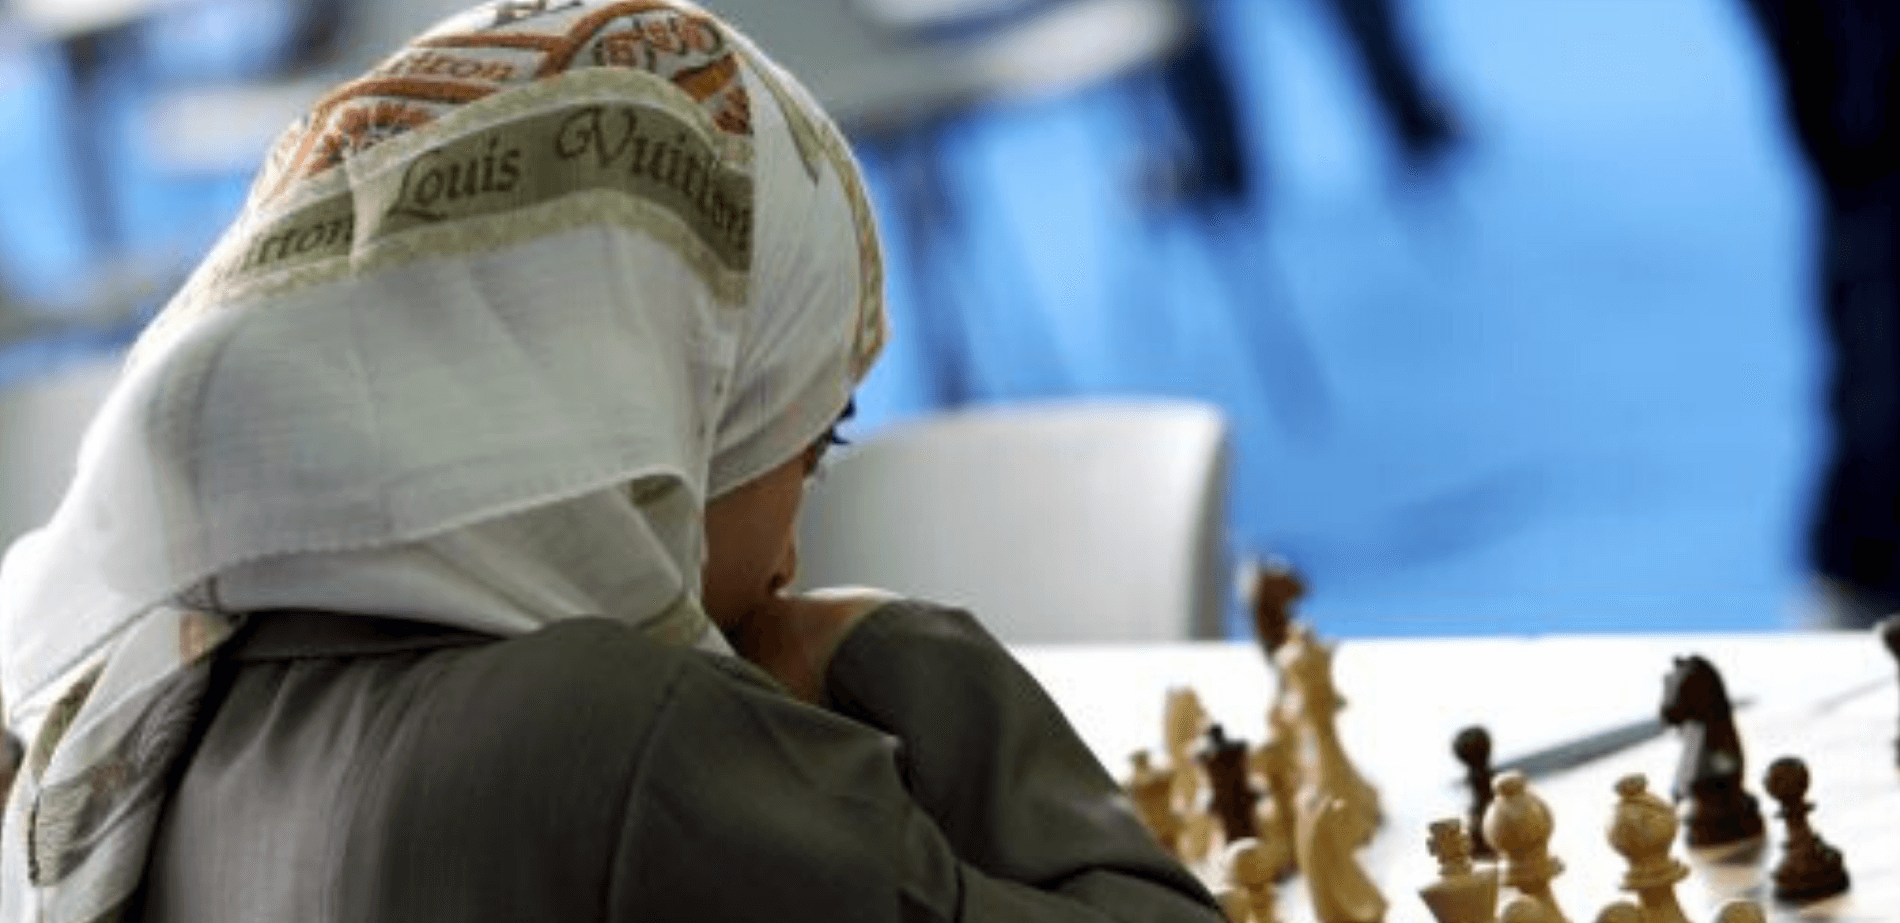 chess fans unite